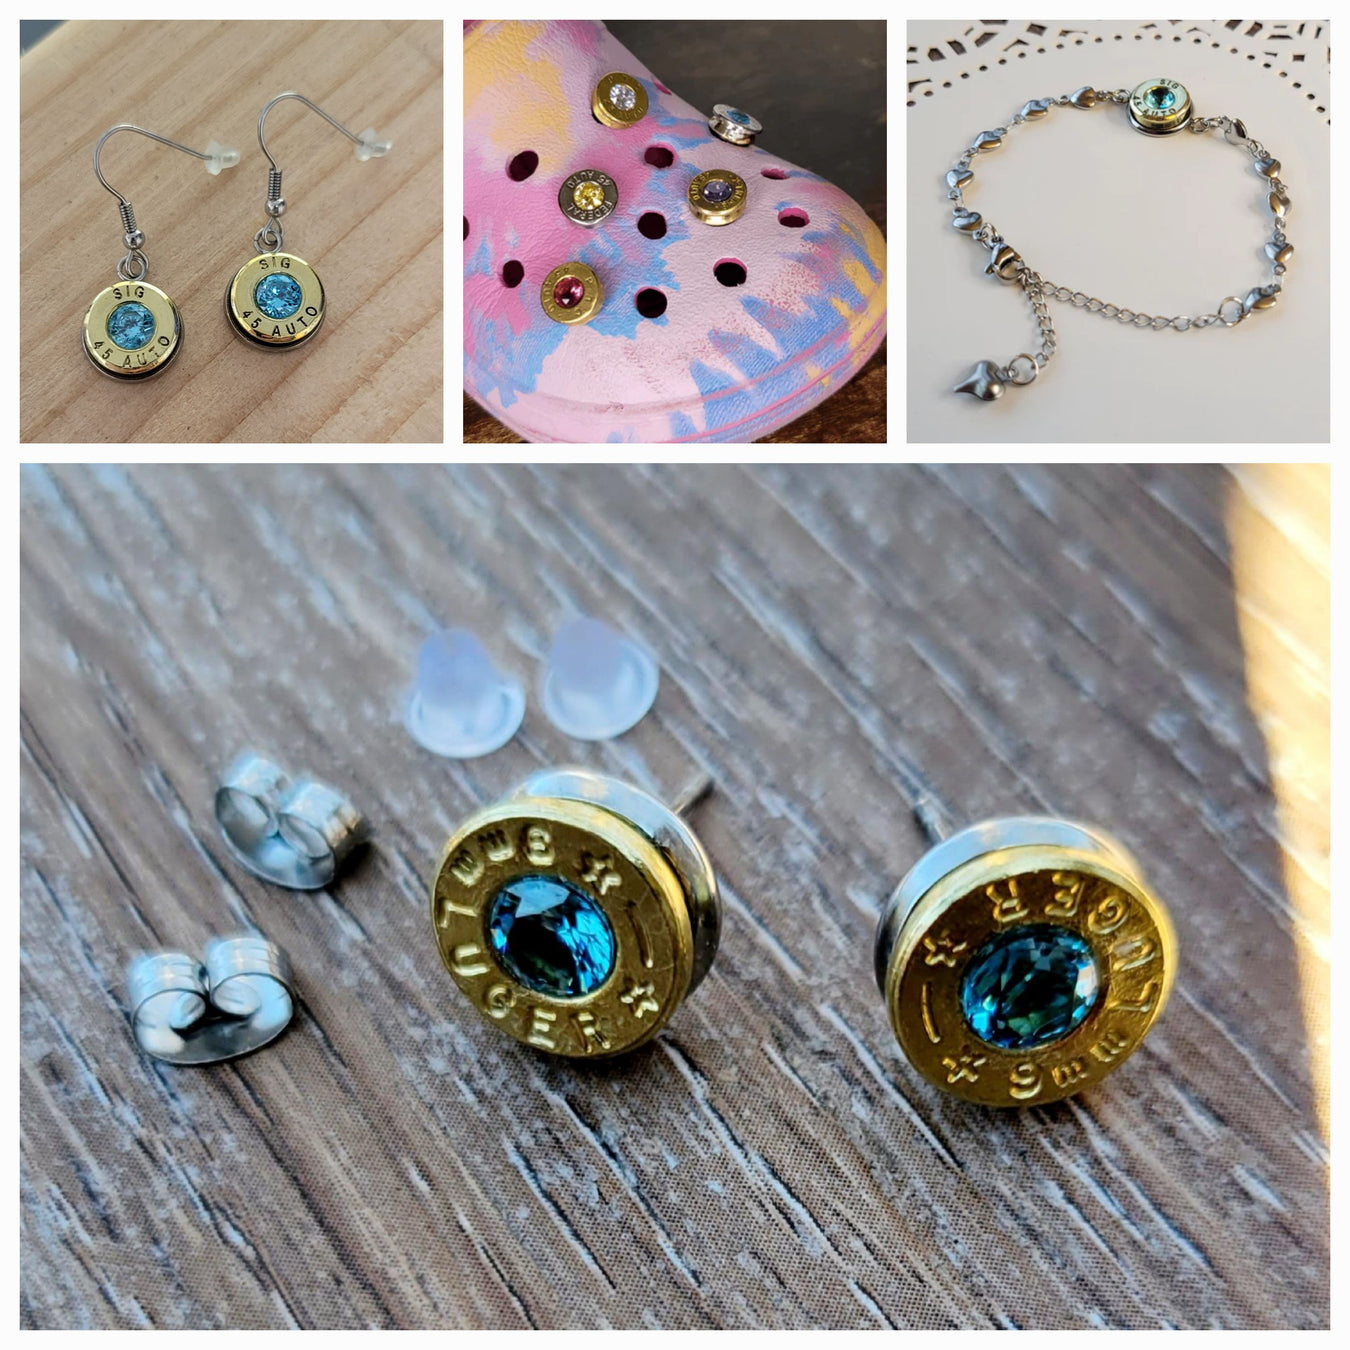 Women's Bullet Casing Jewelry Accessories